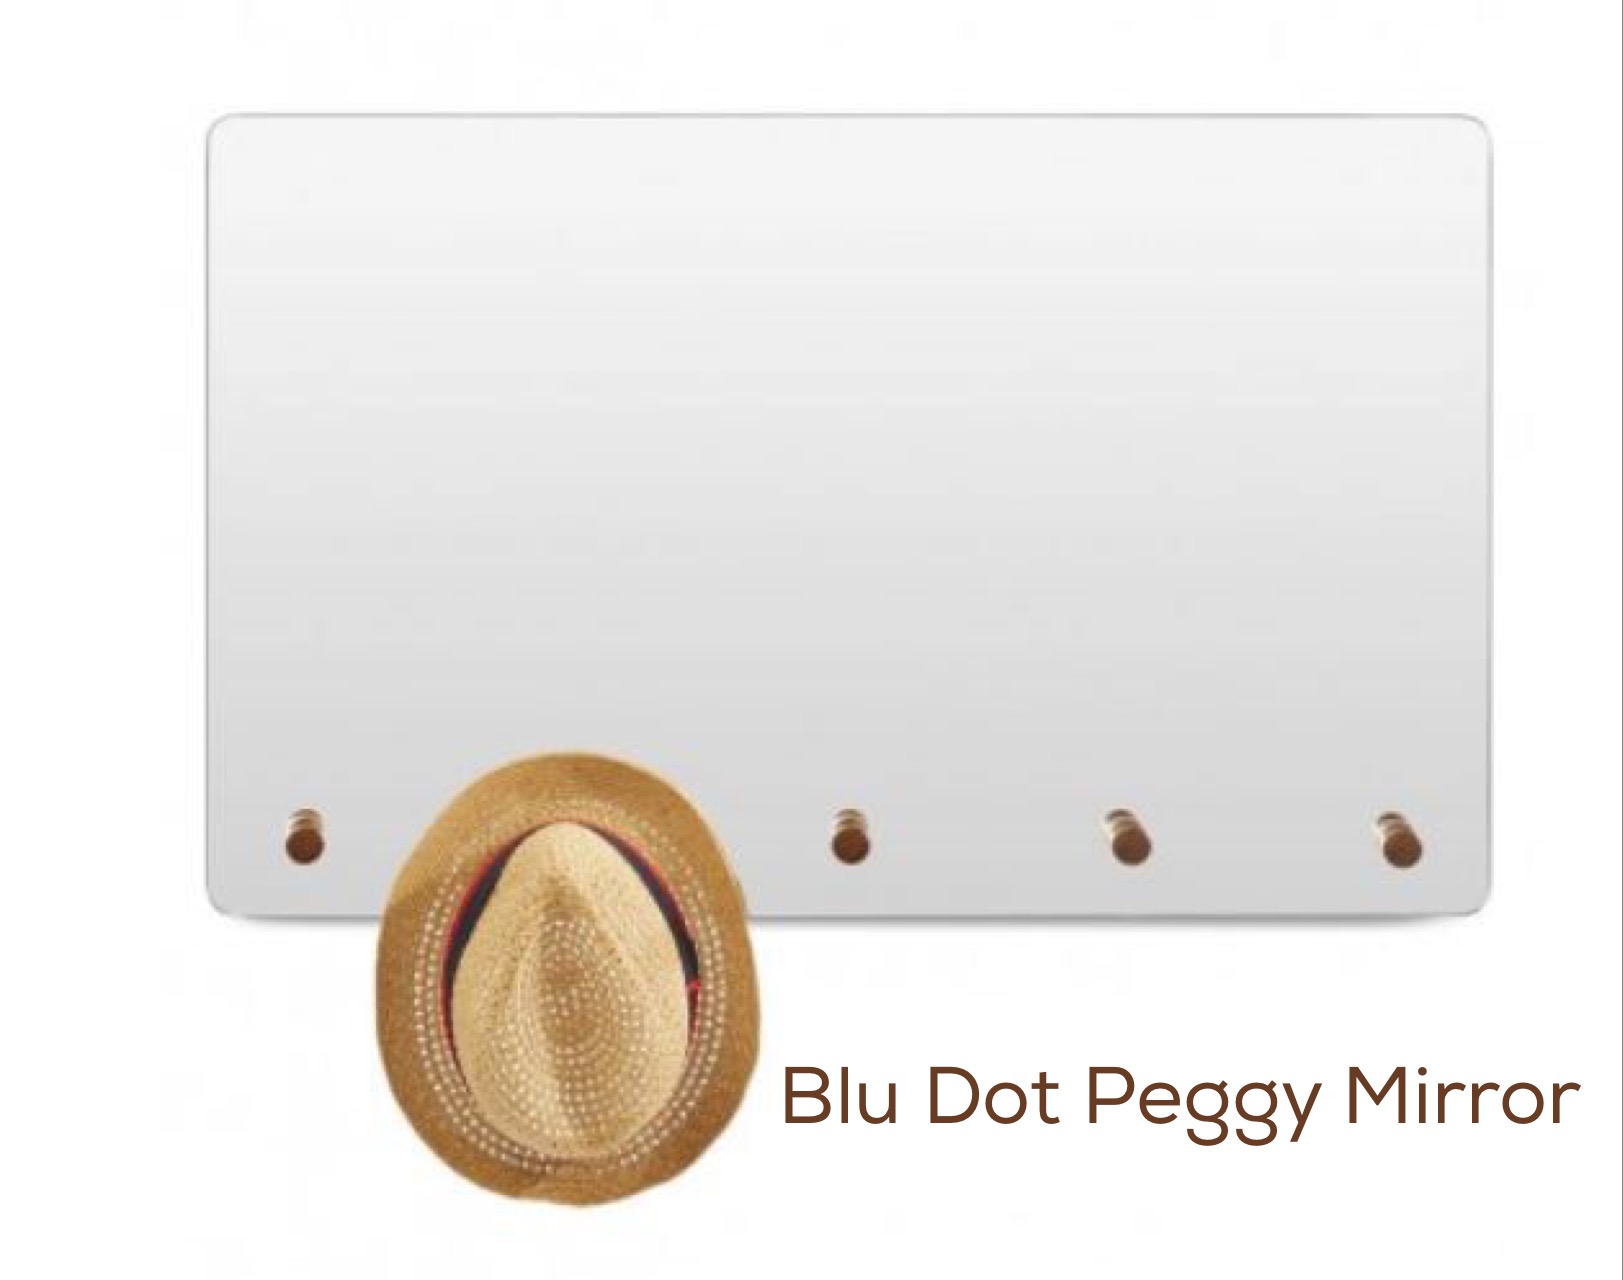 Blu Dot Peggy Mirror